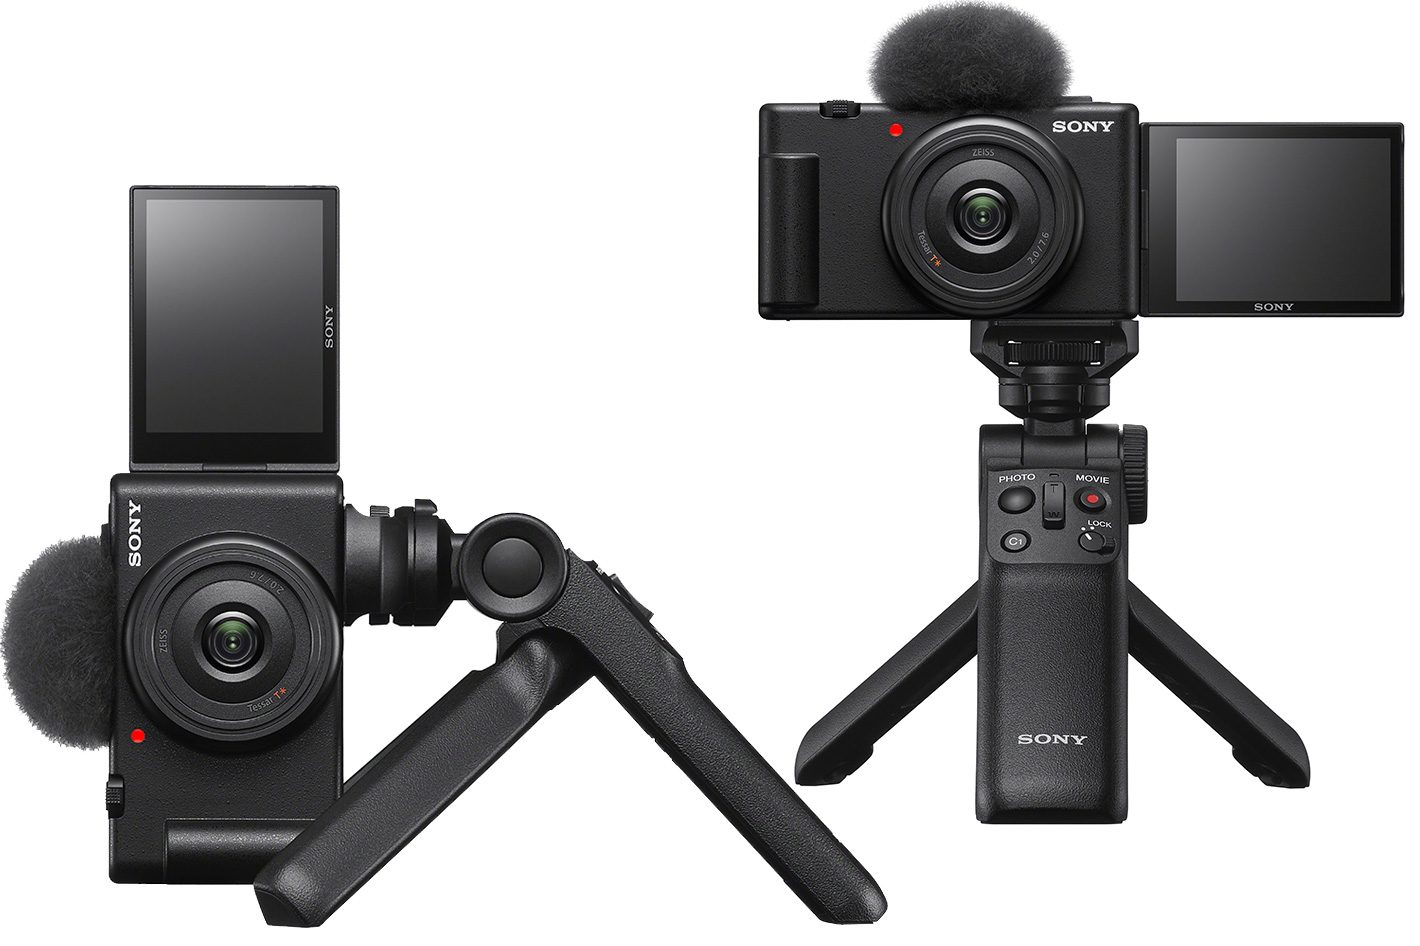 Sony ZV-1F: a vlogging camera to improve video quality